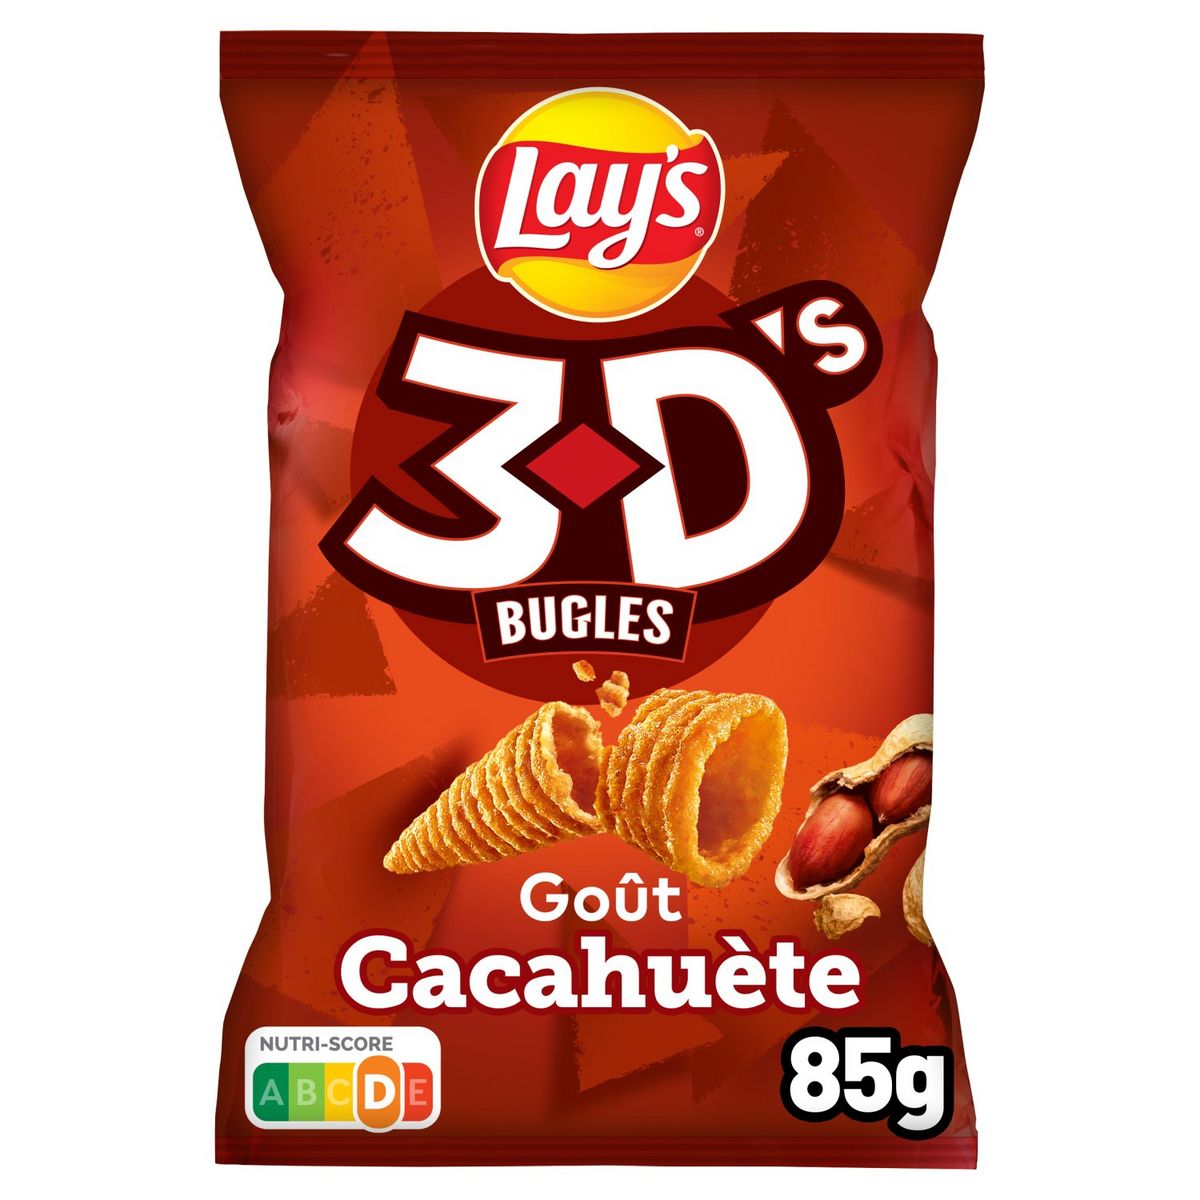 LAY'S Biscuits soufflés 3D's bugles goût cacahuète 85g